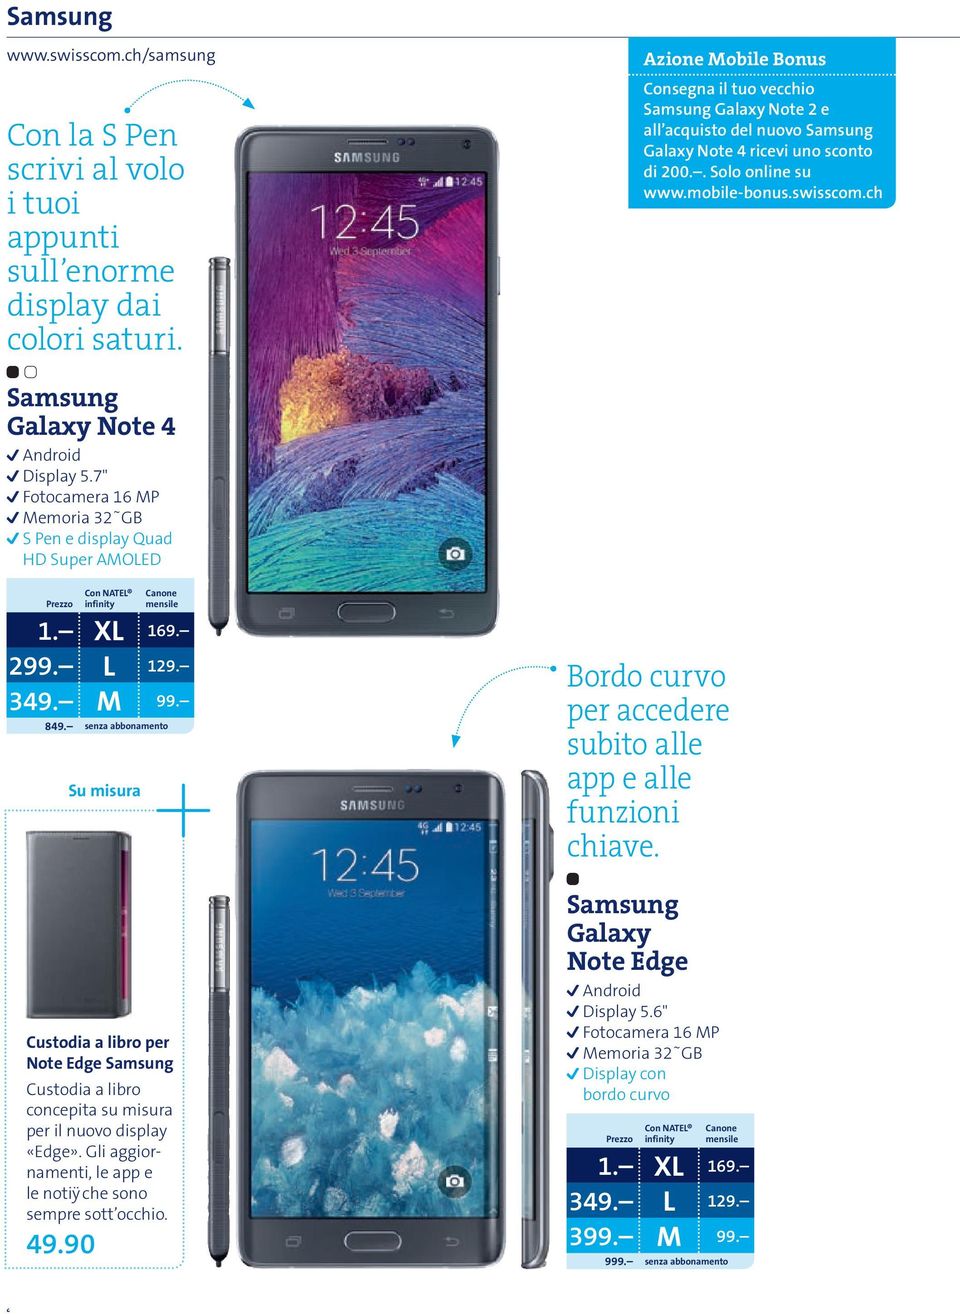 ch Samsung Galaxy Note 4 Display 5.7" Fotocamera 16 MP Memoria 32 GB S Pen e display Quad HD Super AMOLED 299. L 129. 349. M 99. 849.